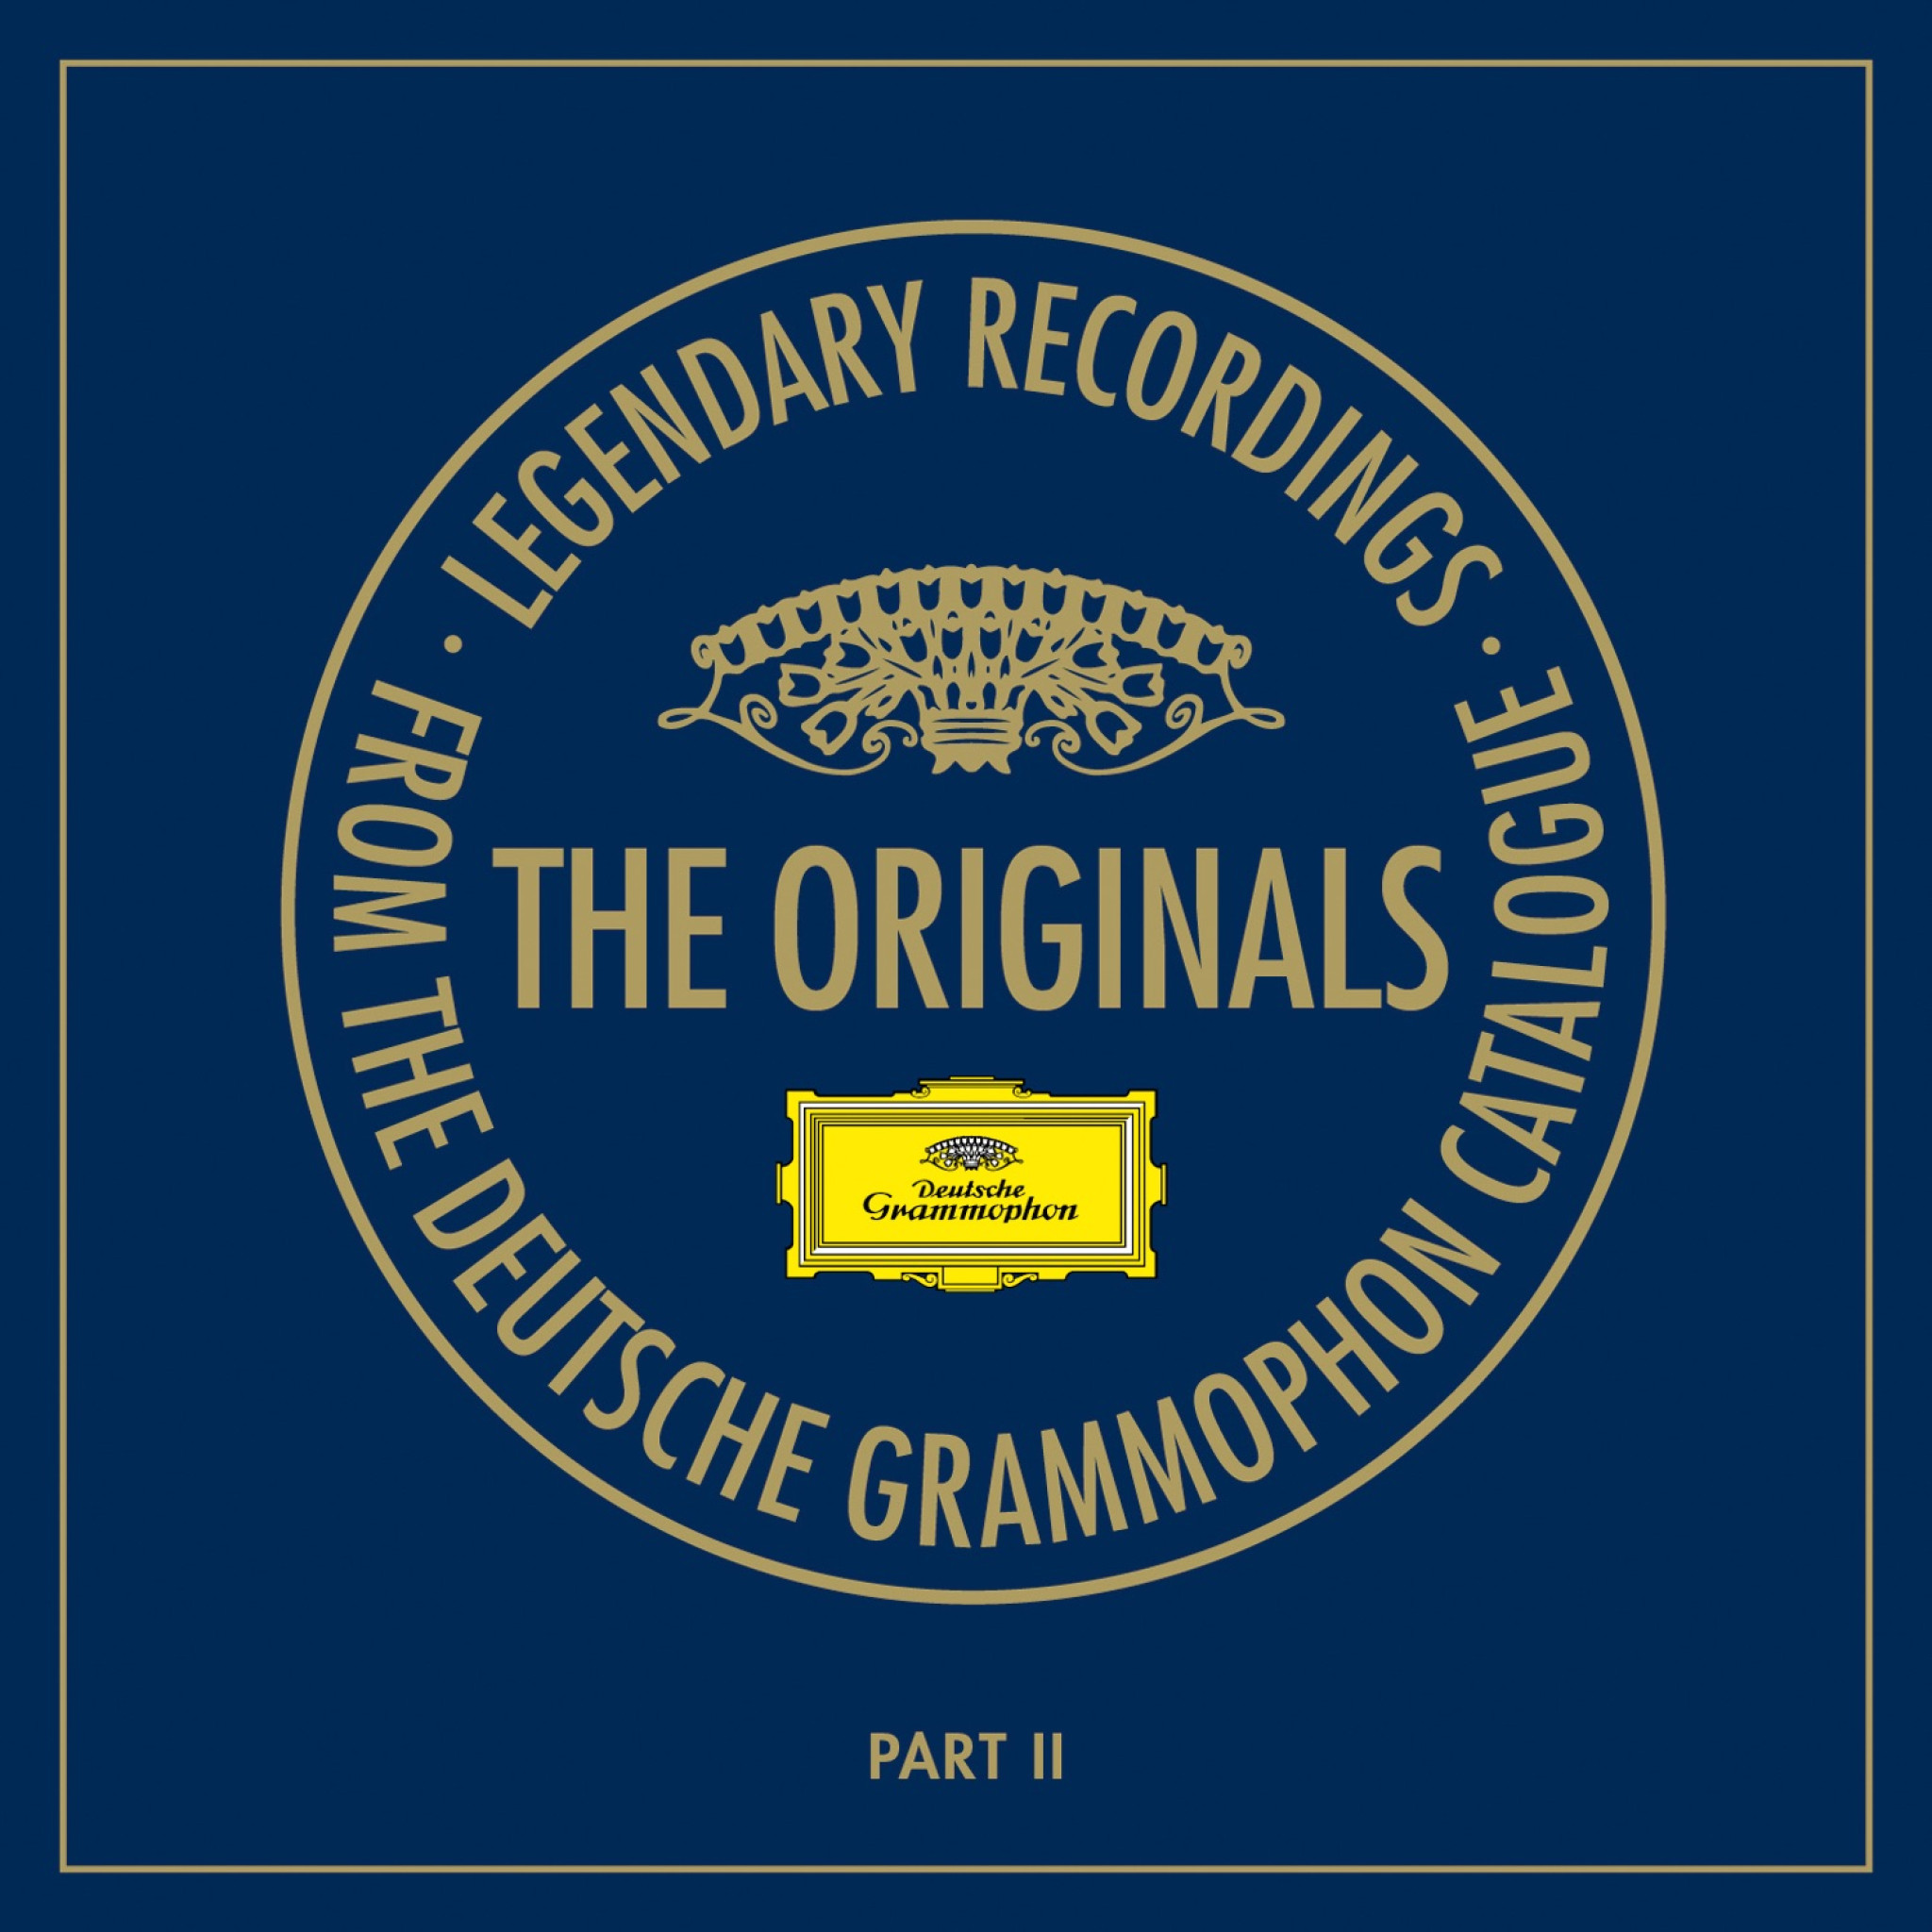 THE ORIGINALS – LEGENDARY RECORDINGS Part 2 Cover